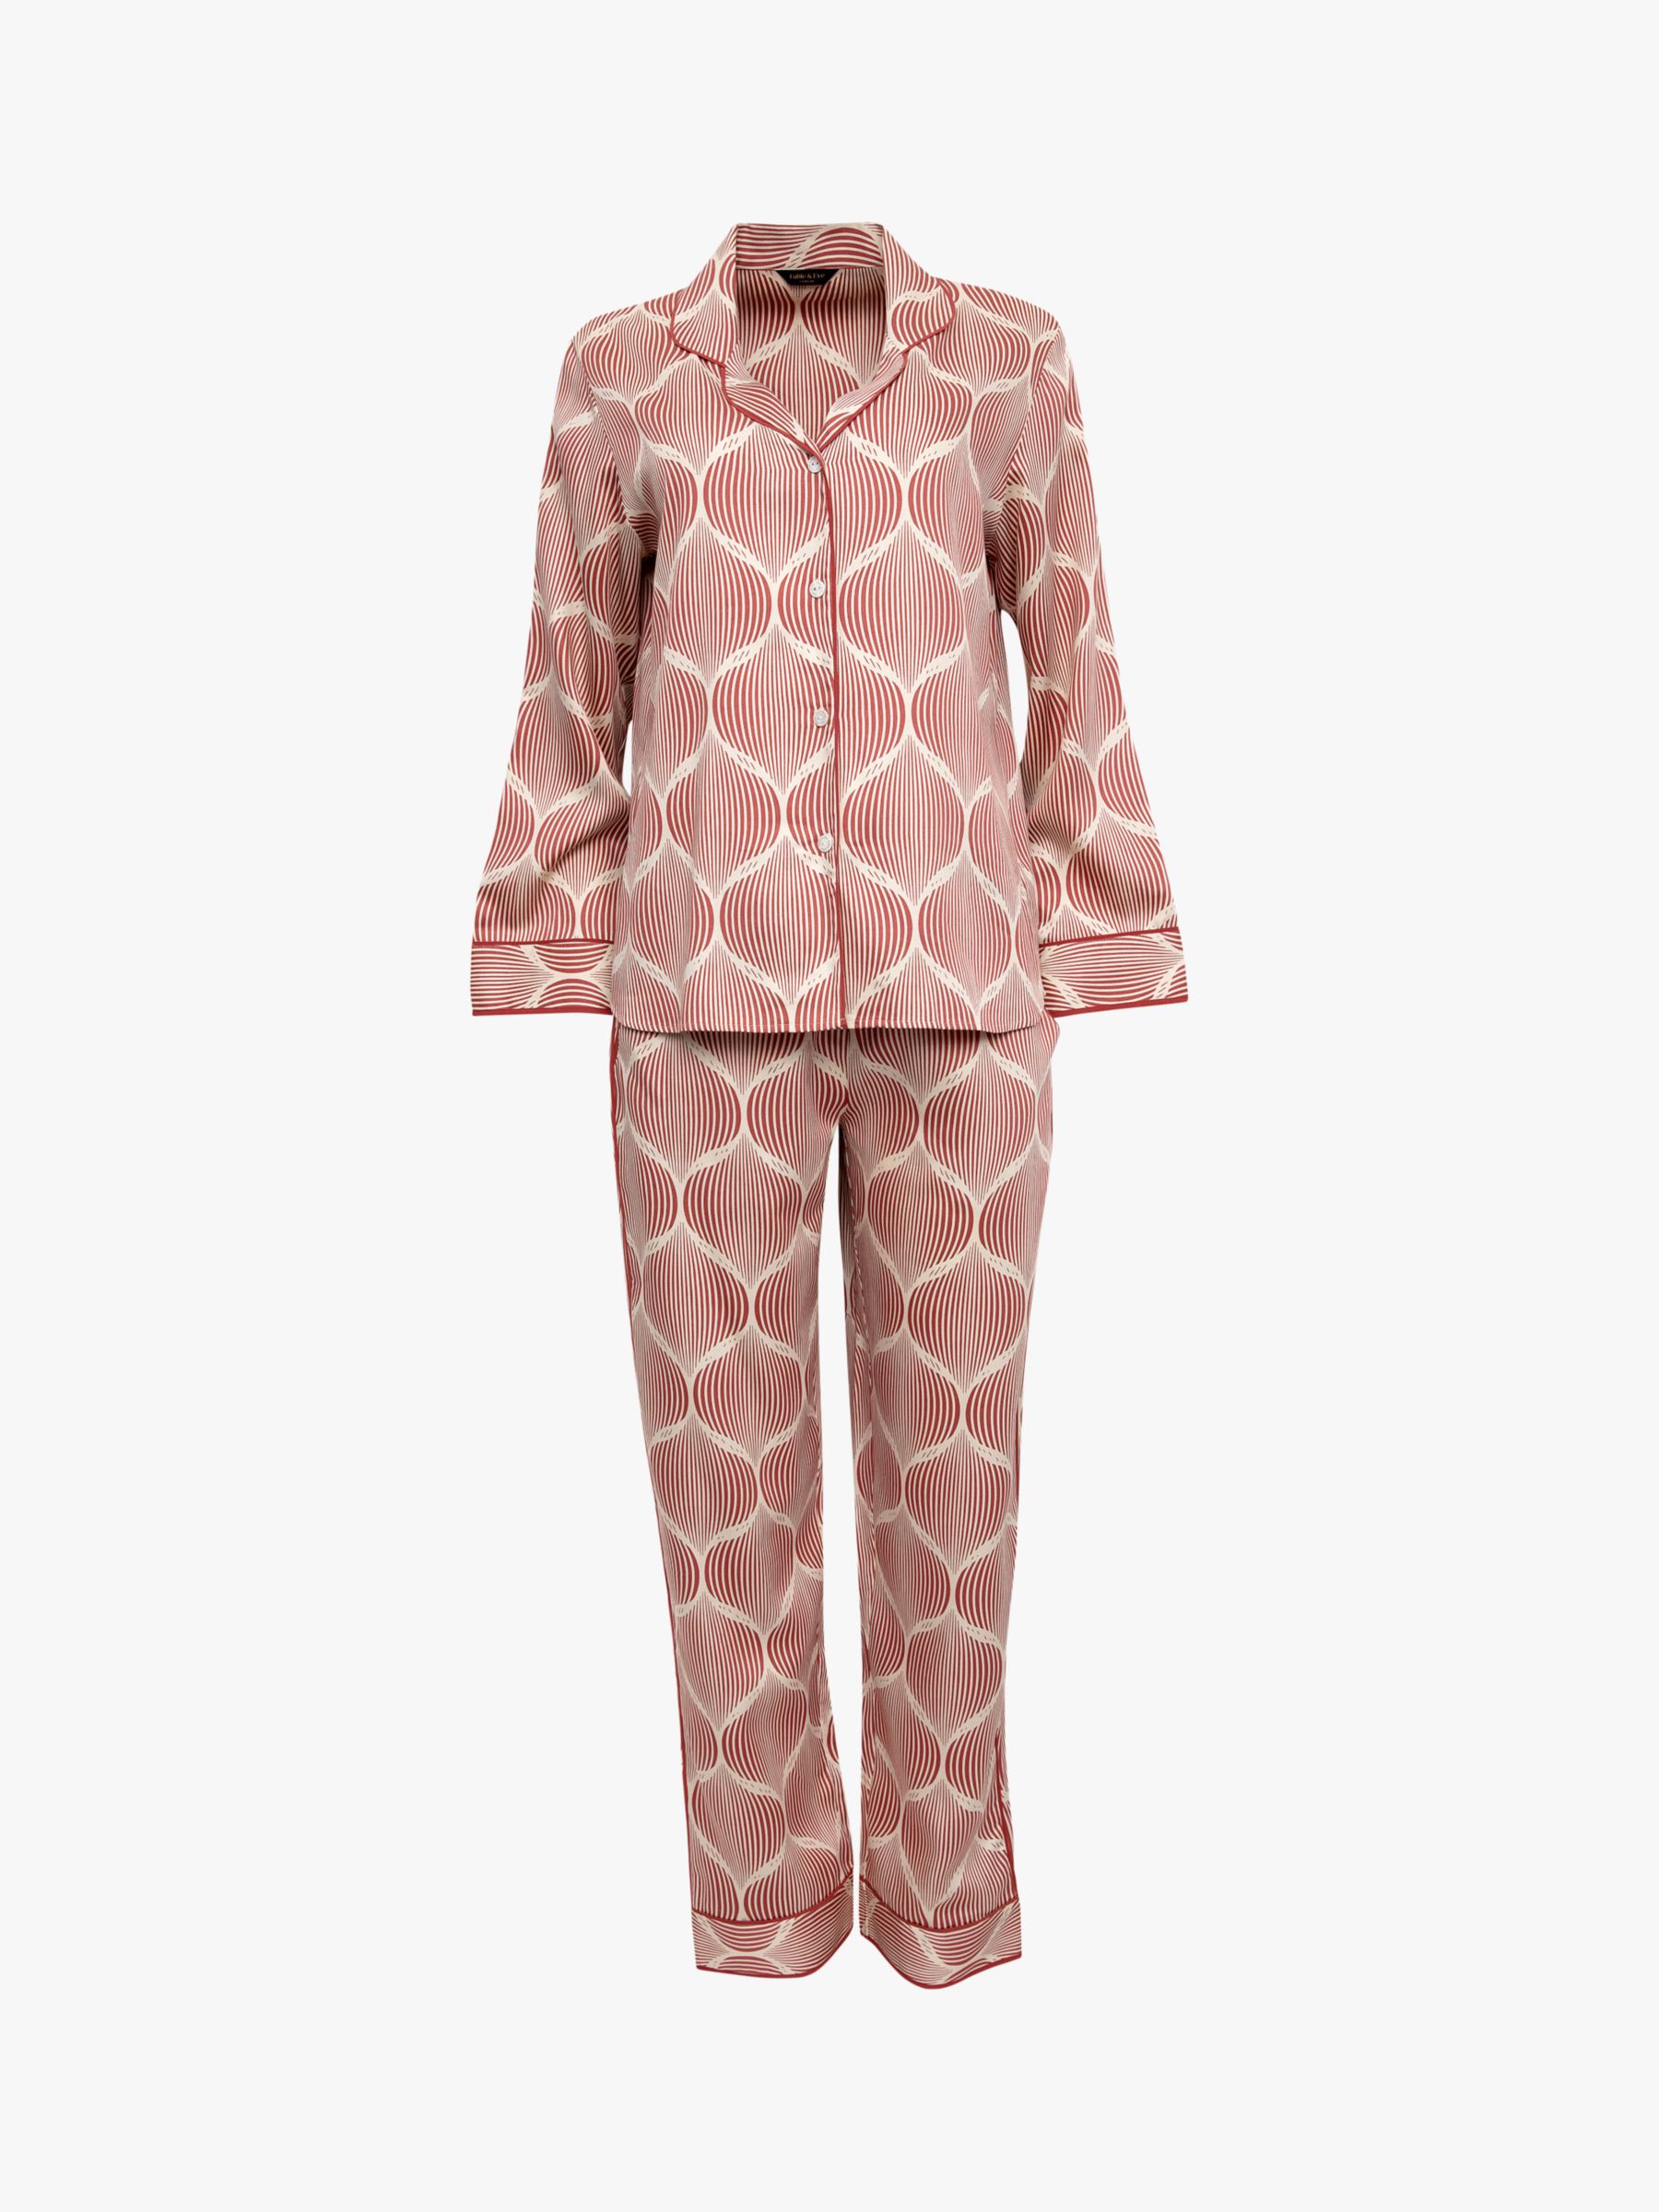 Buy Fable & Eve Islington Geometric Print Pyjamas, Burnt Orange Online at johnlewis.com